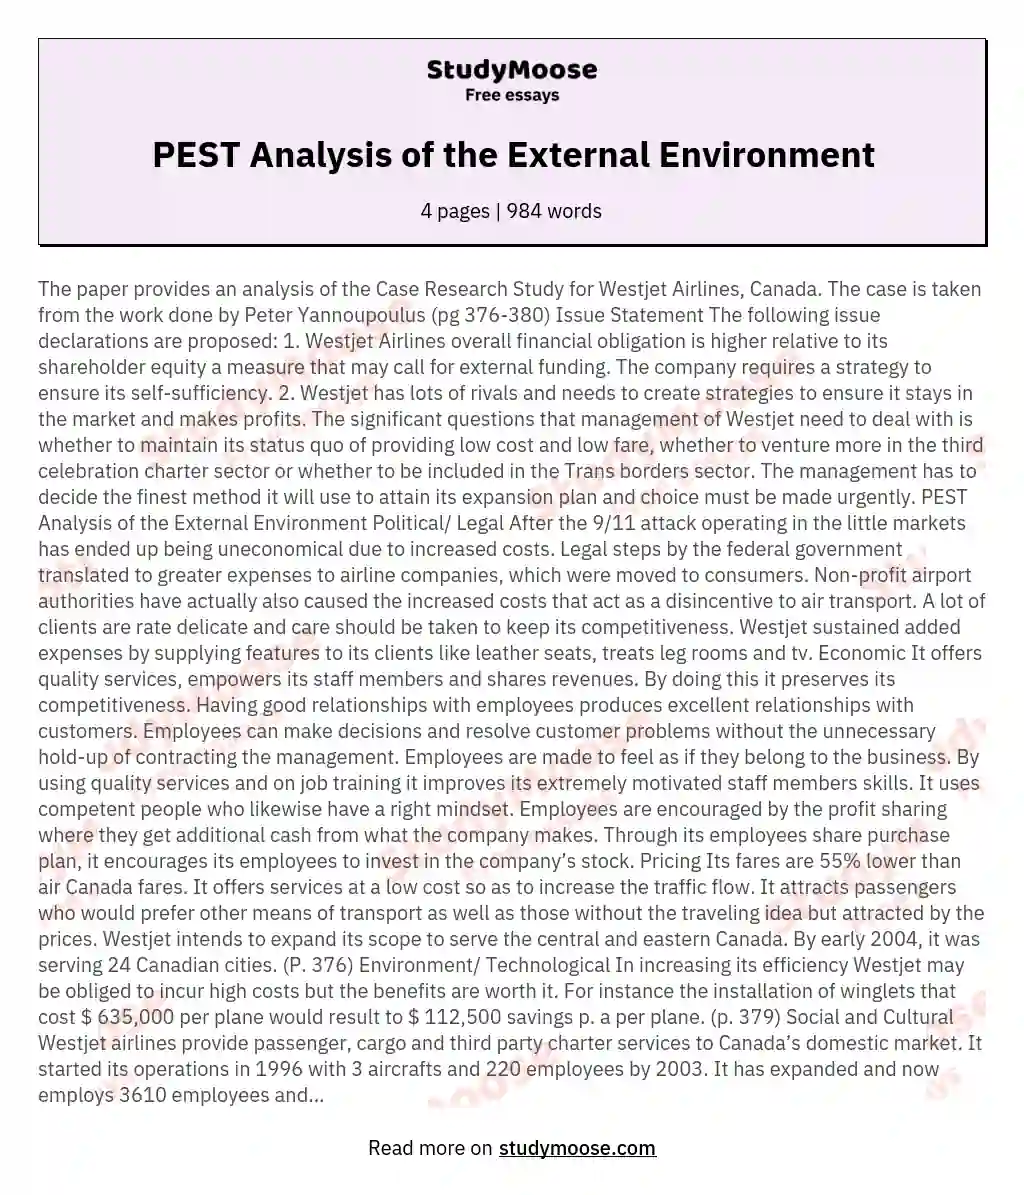 PEST Analysis of the External Environment essay